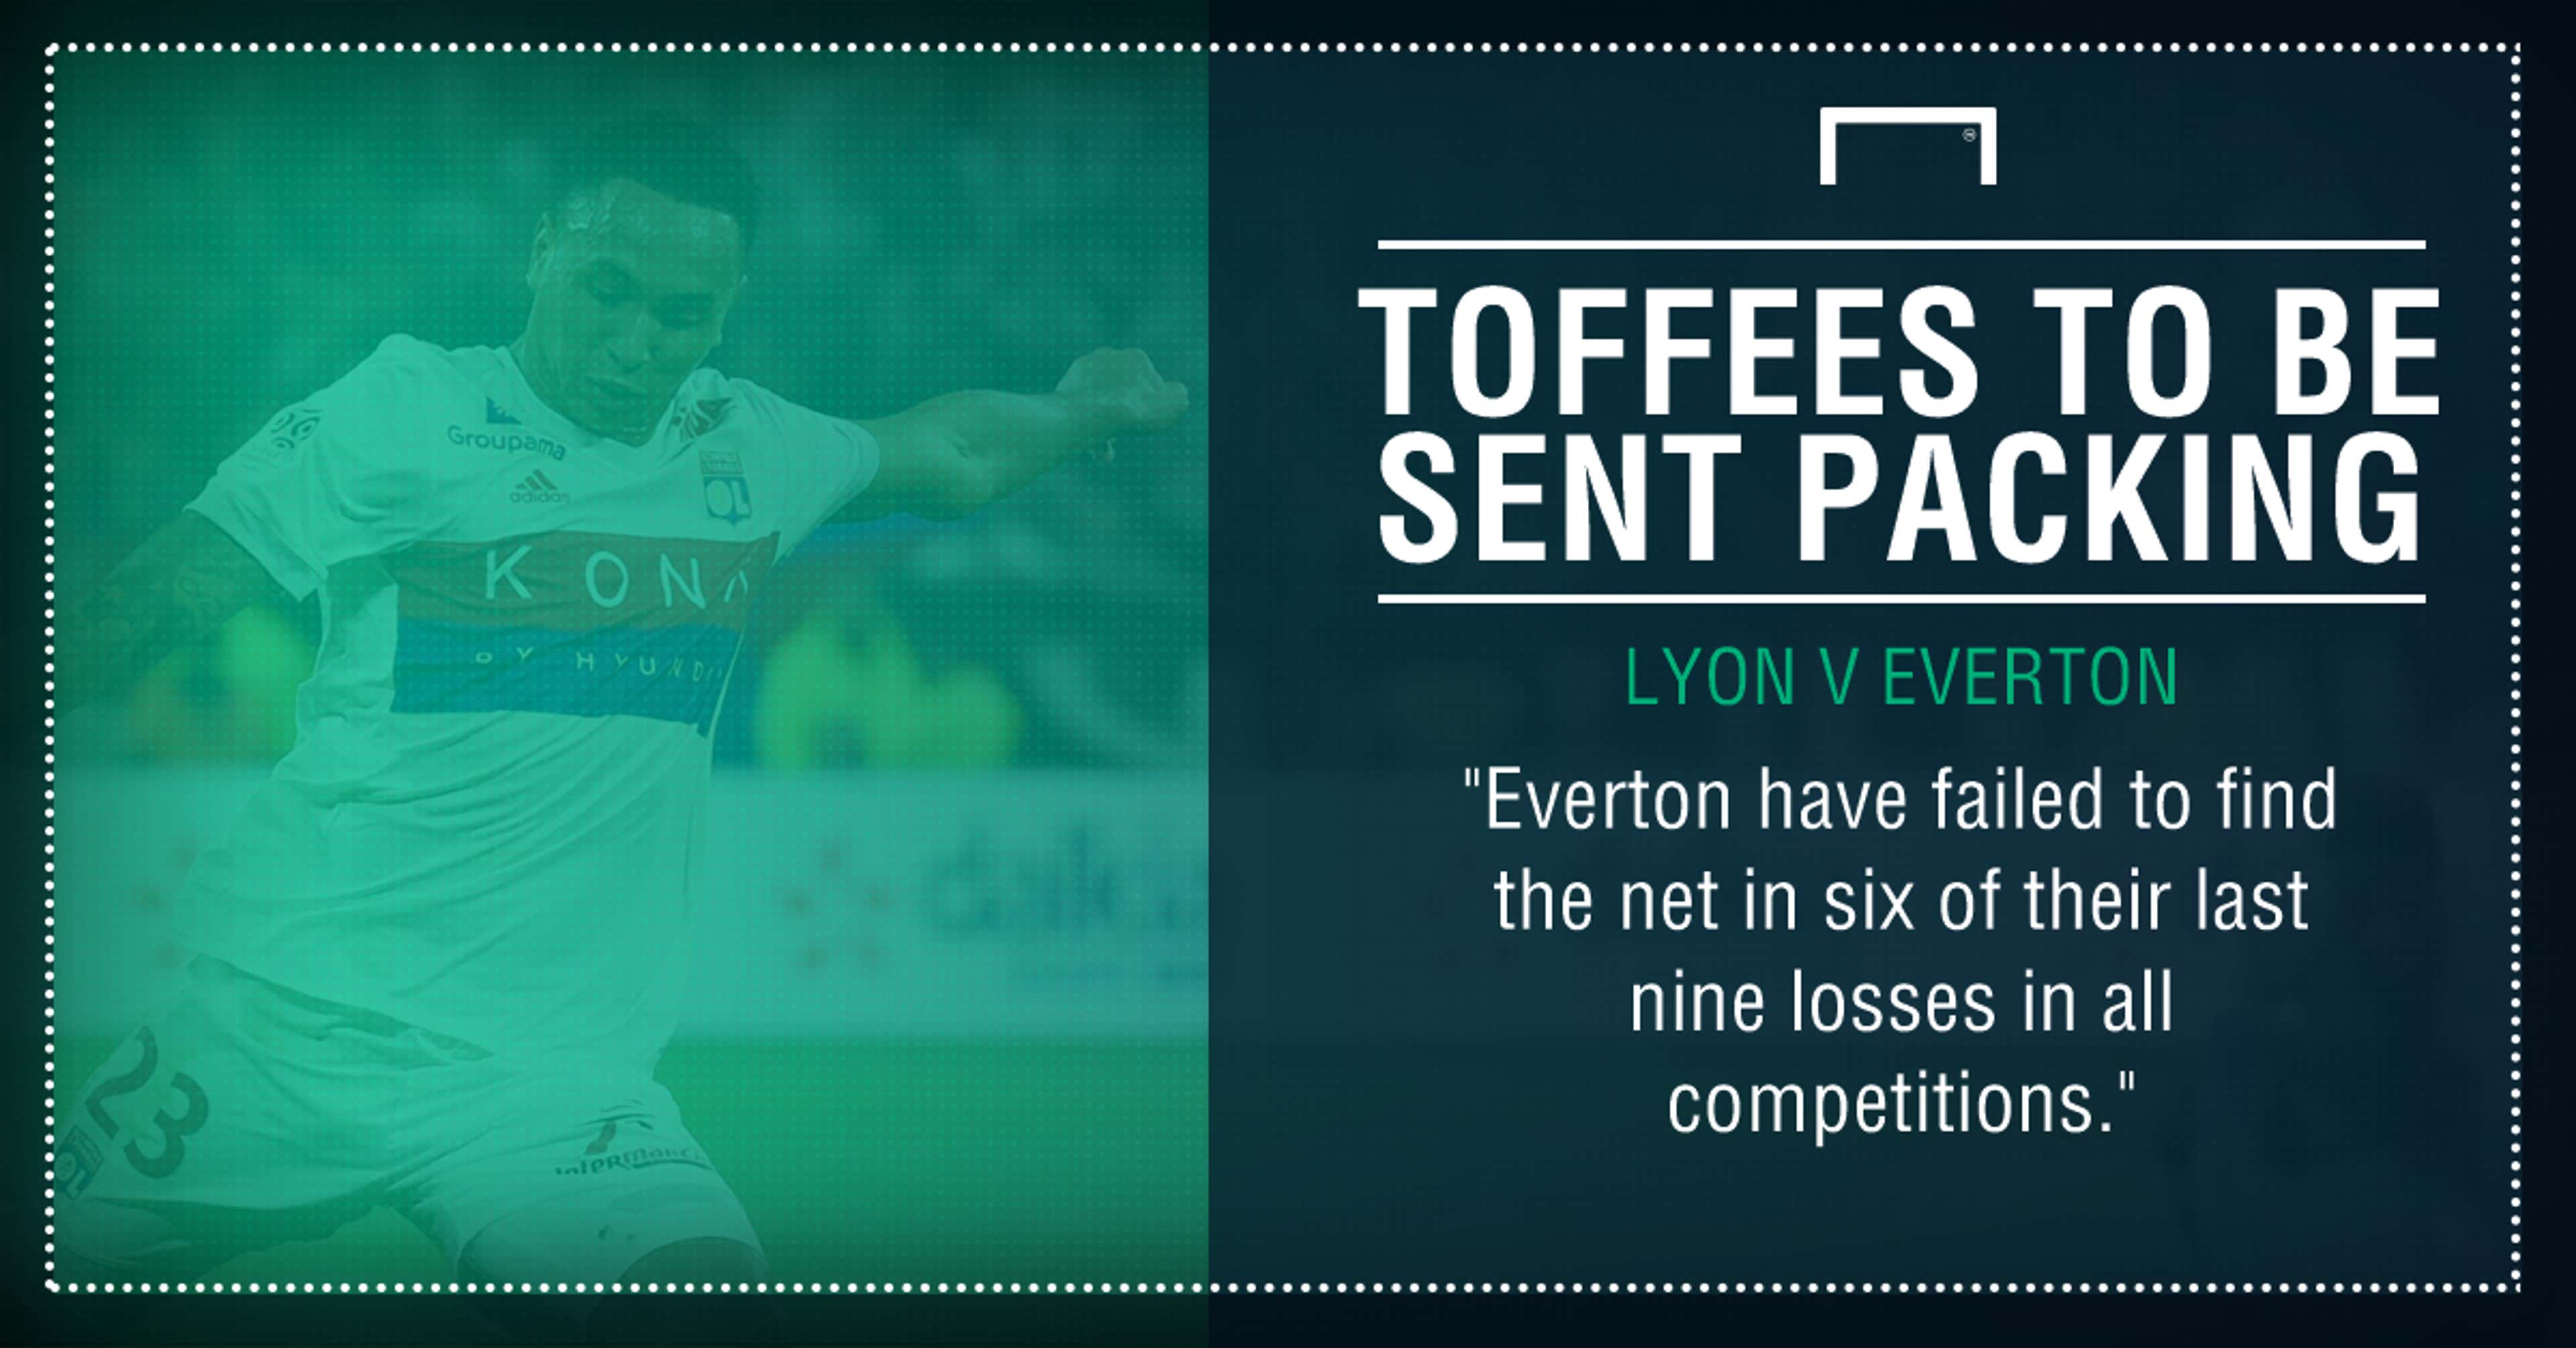 Lyon Everton graphic